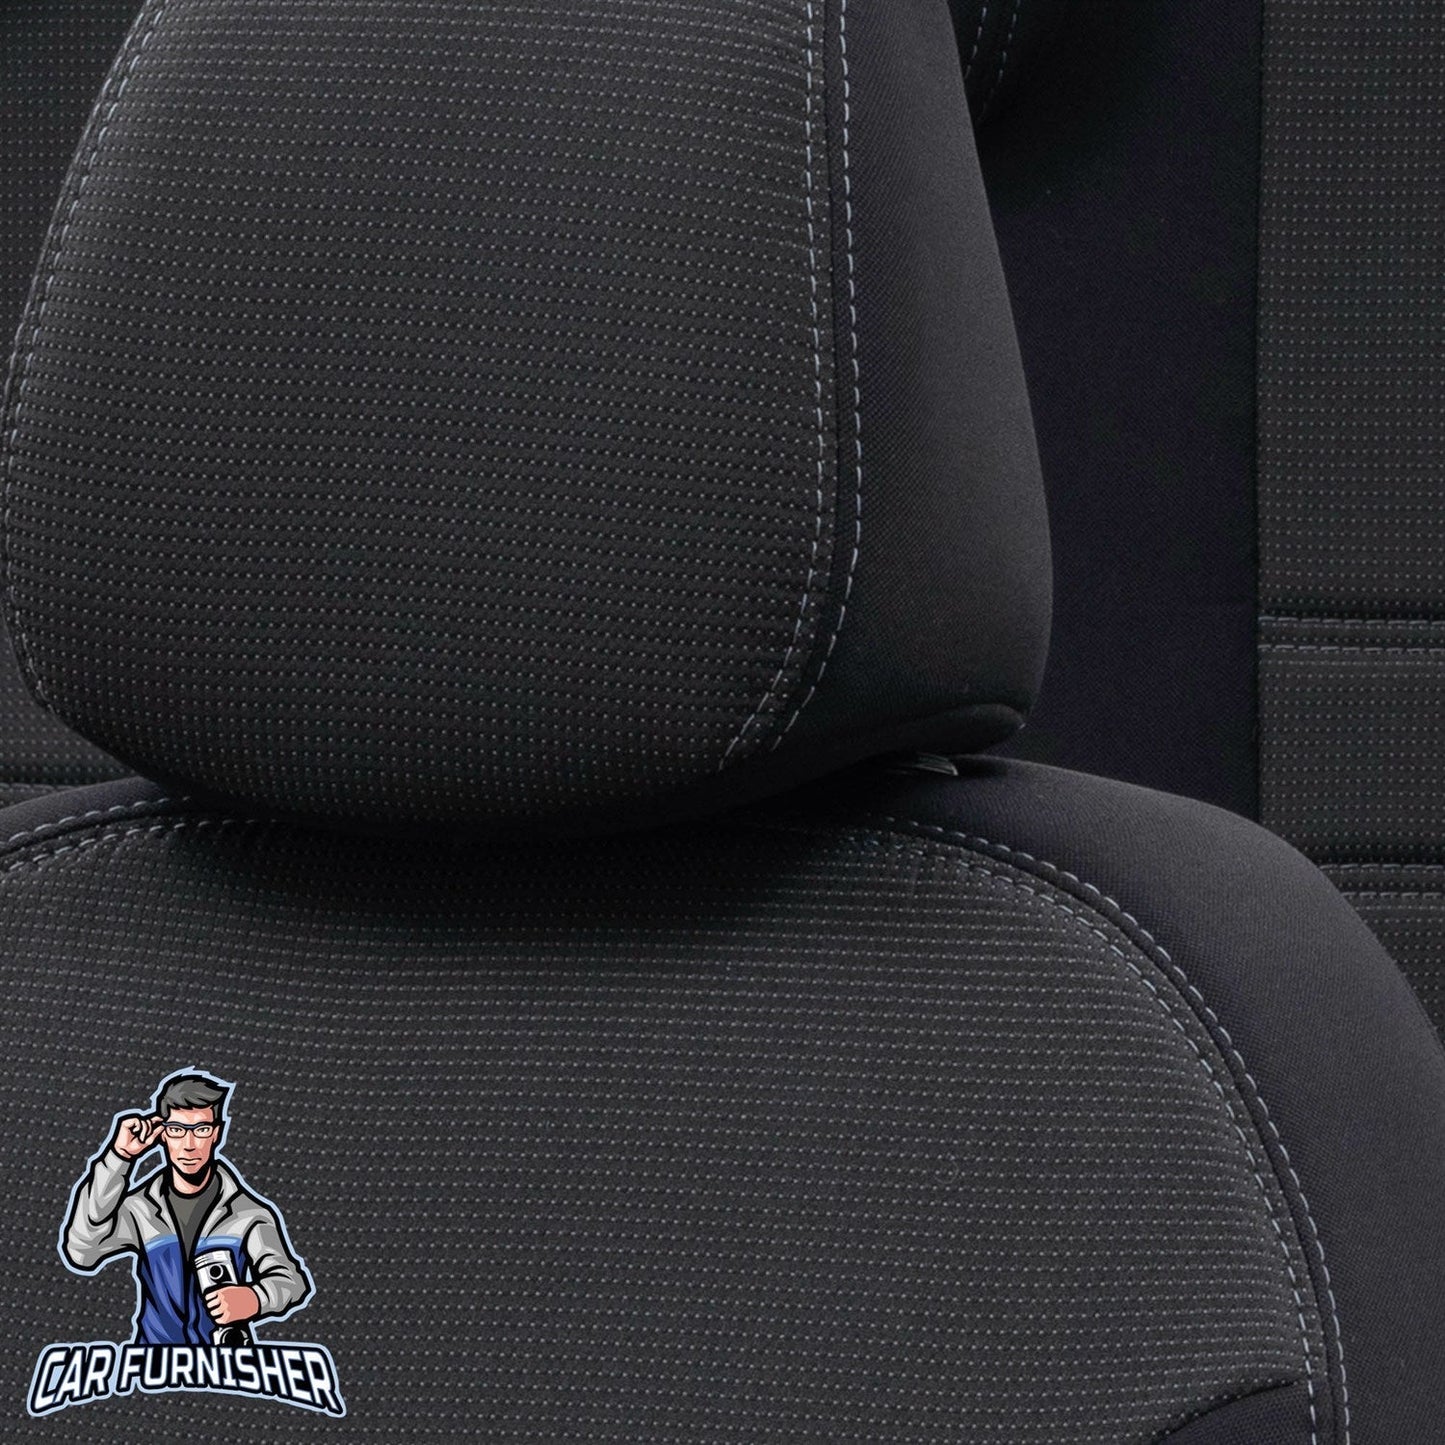 Suzuki Vitara Seat Covers Original Jacquard Design Dark Gray Jacquard Fabric